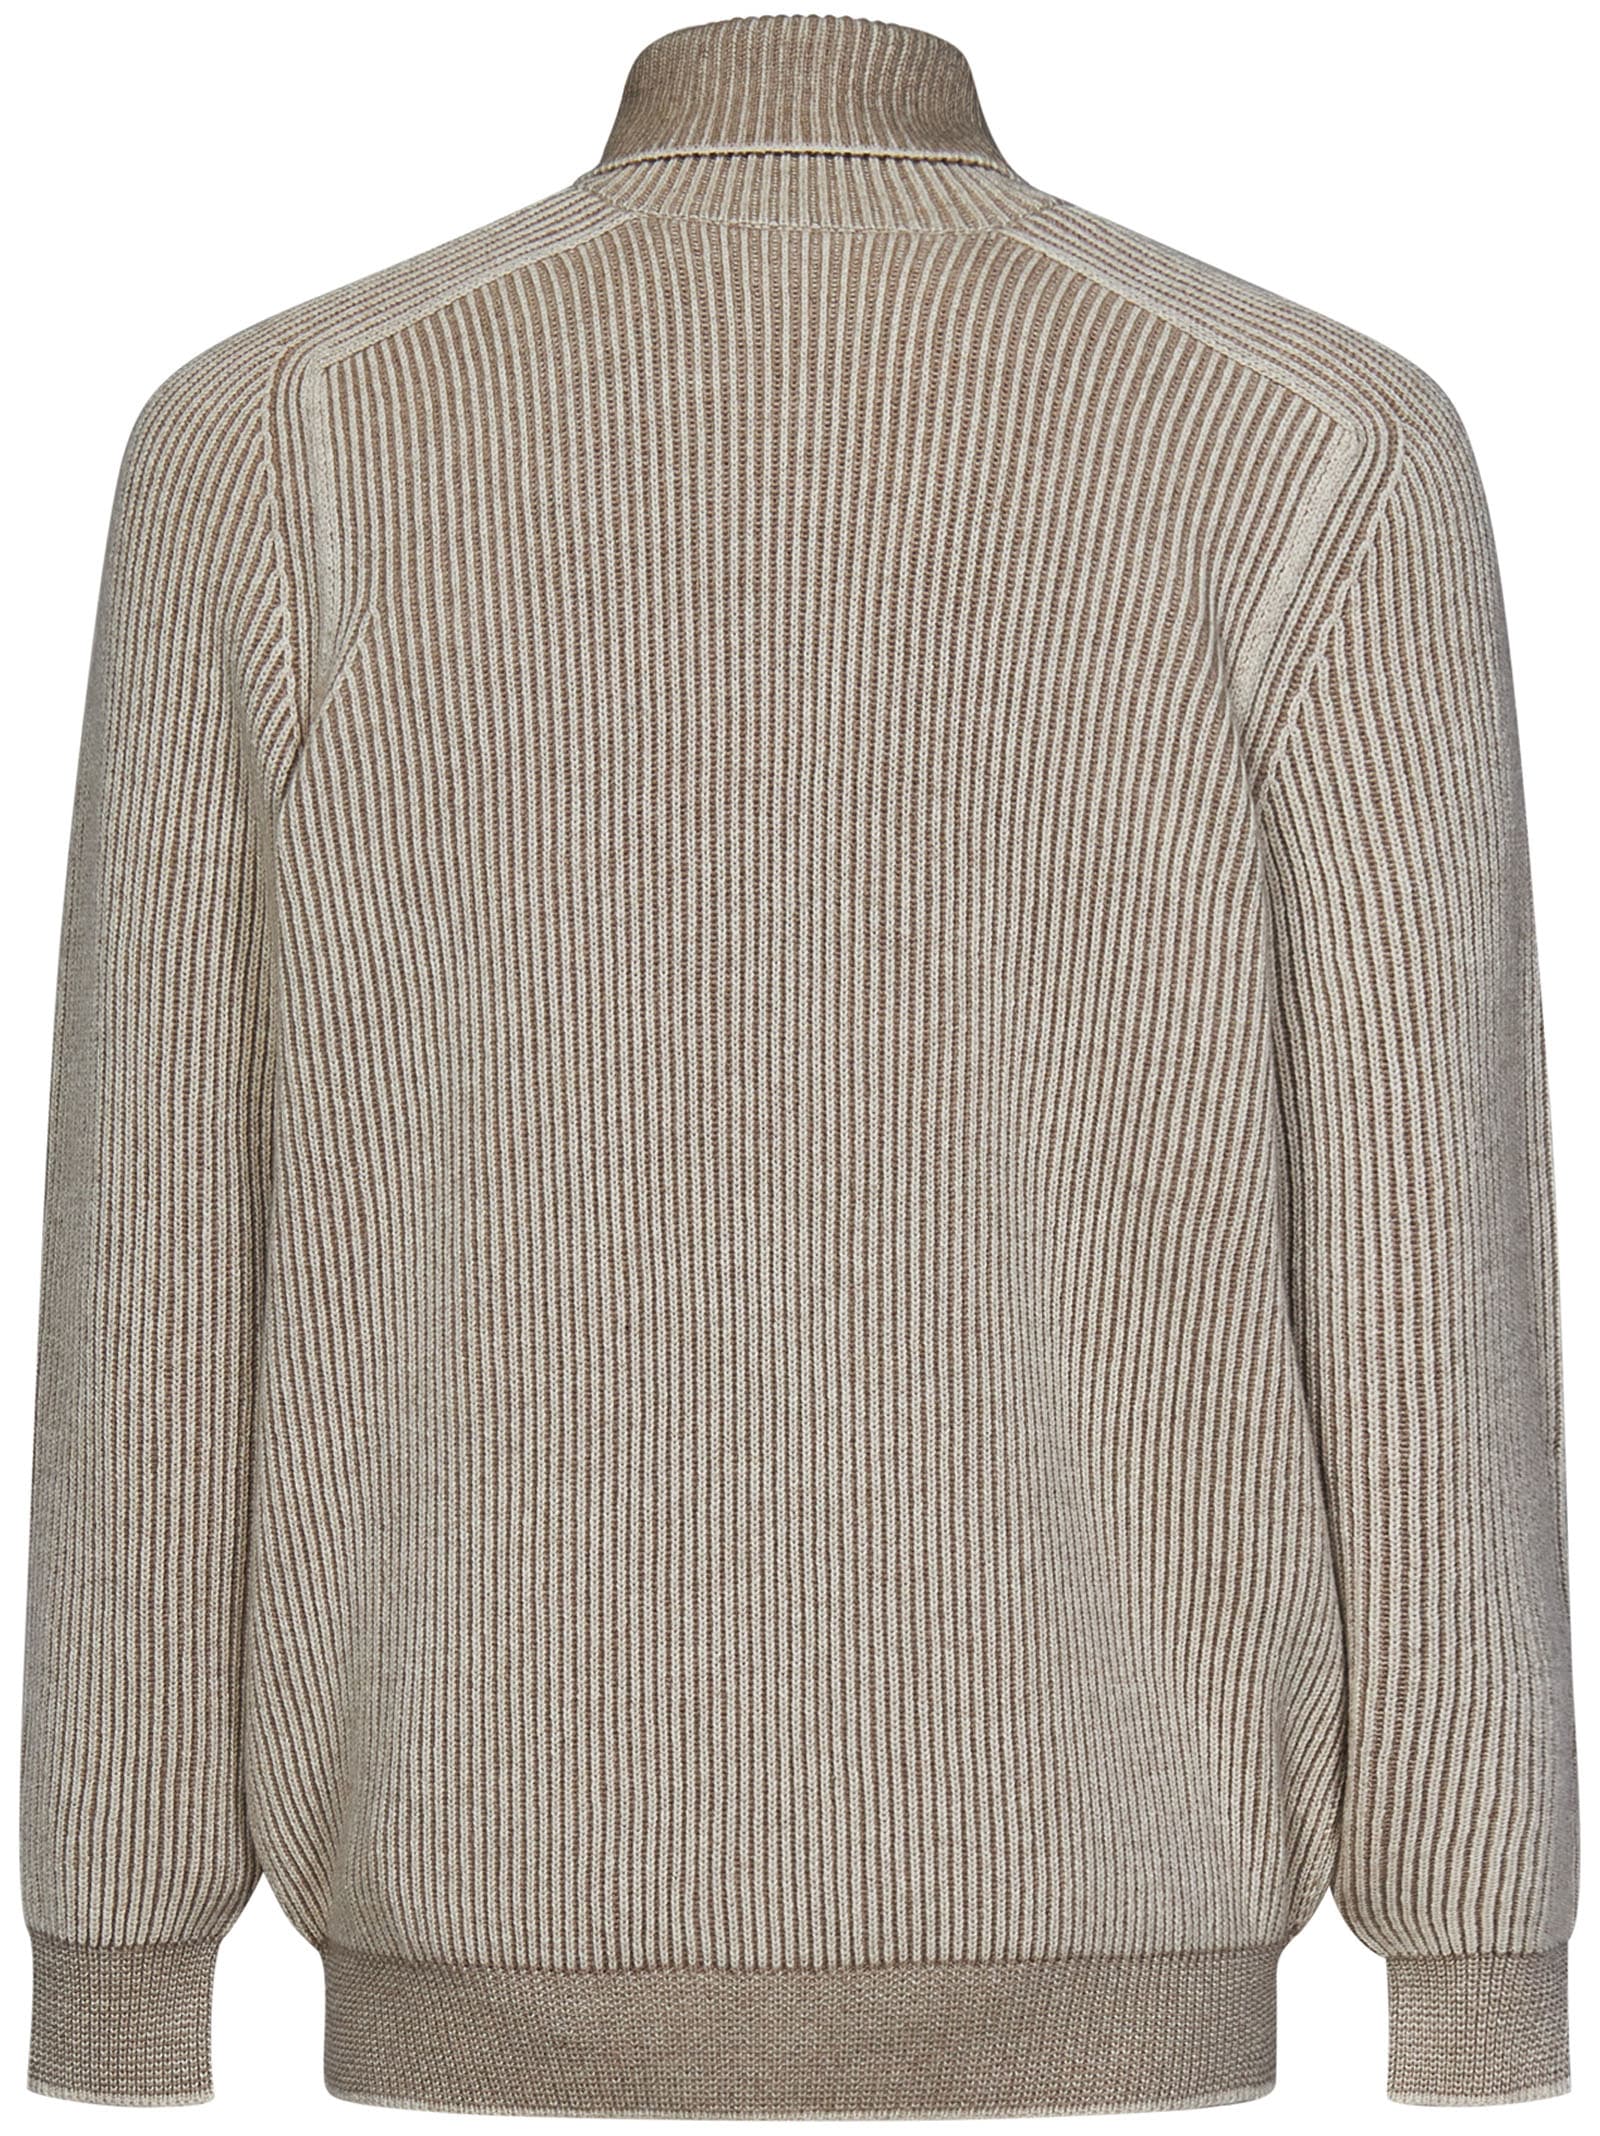 Shop Sease Sweater